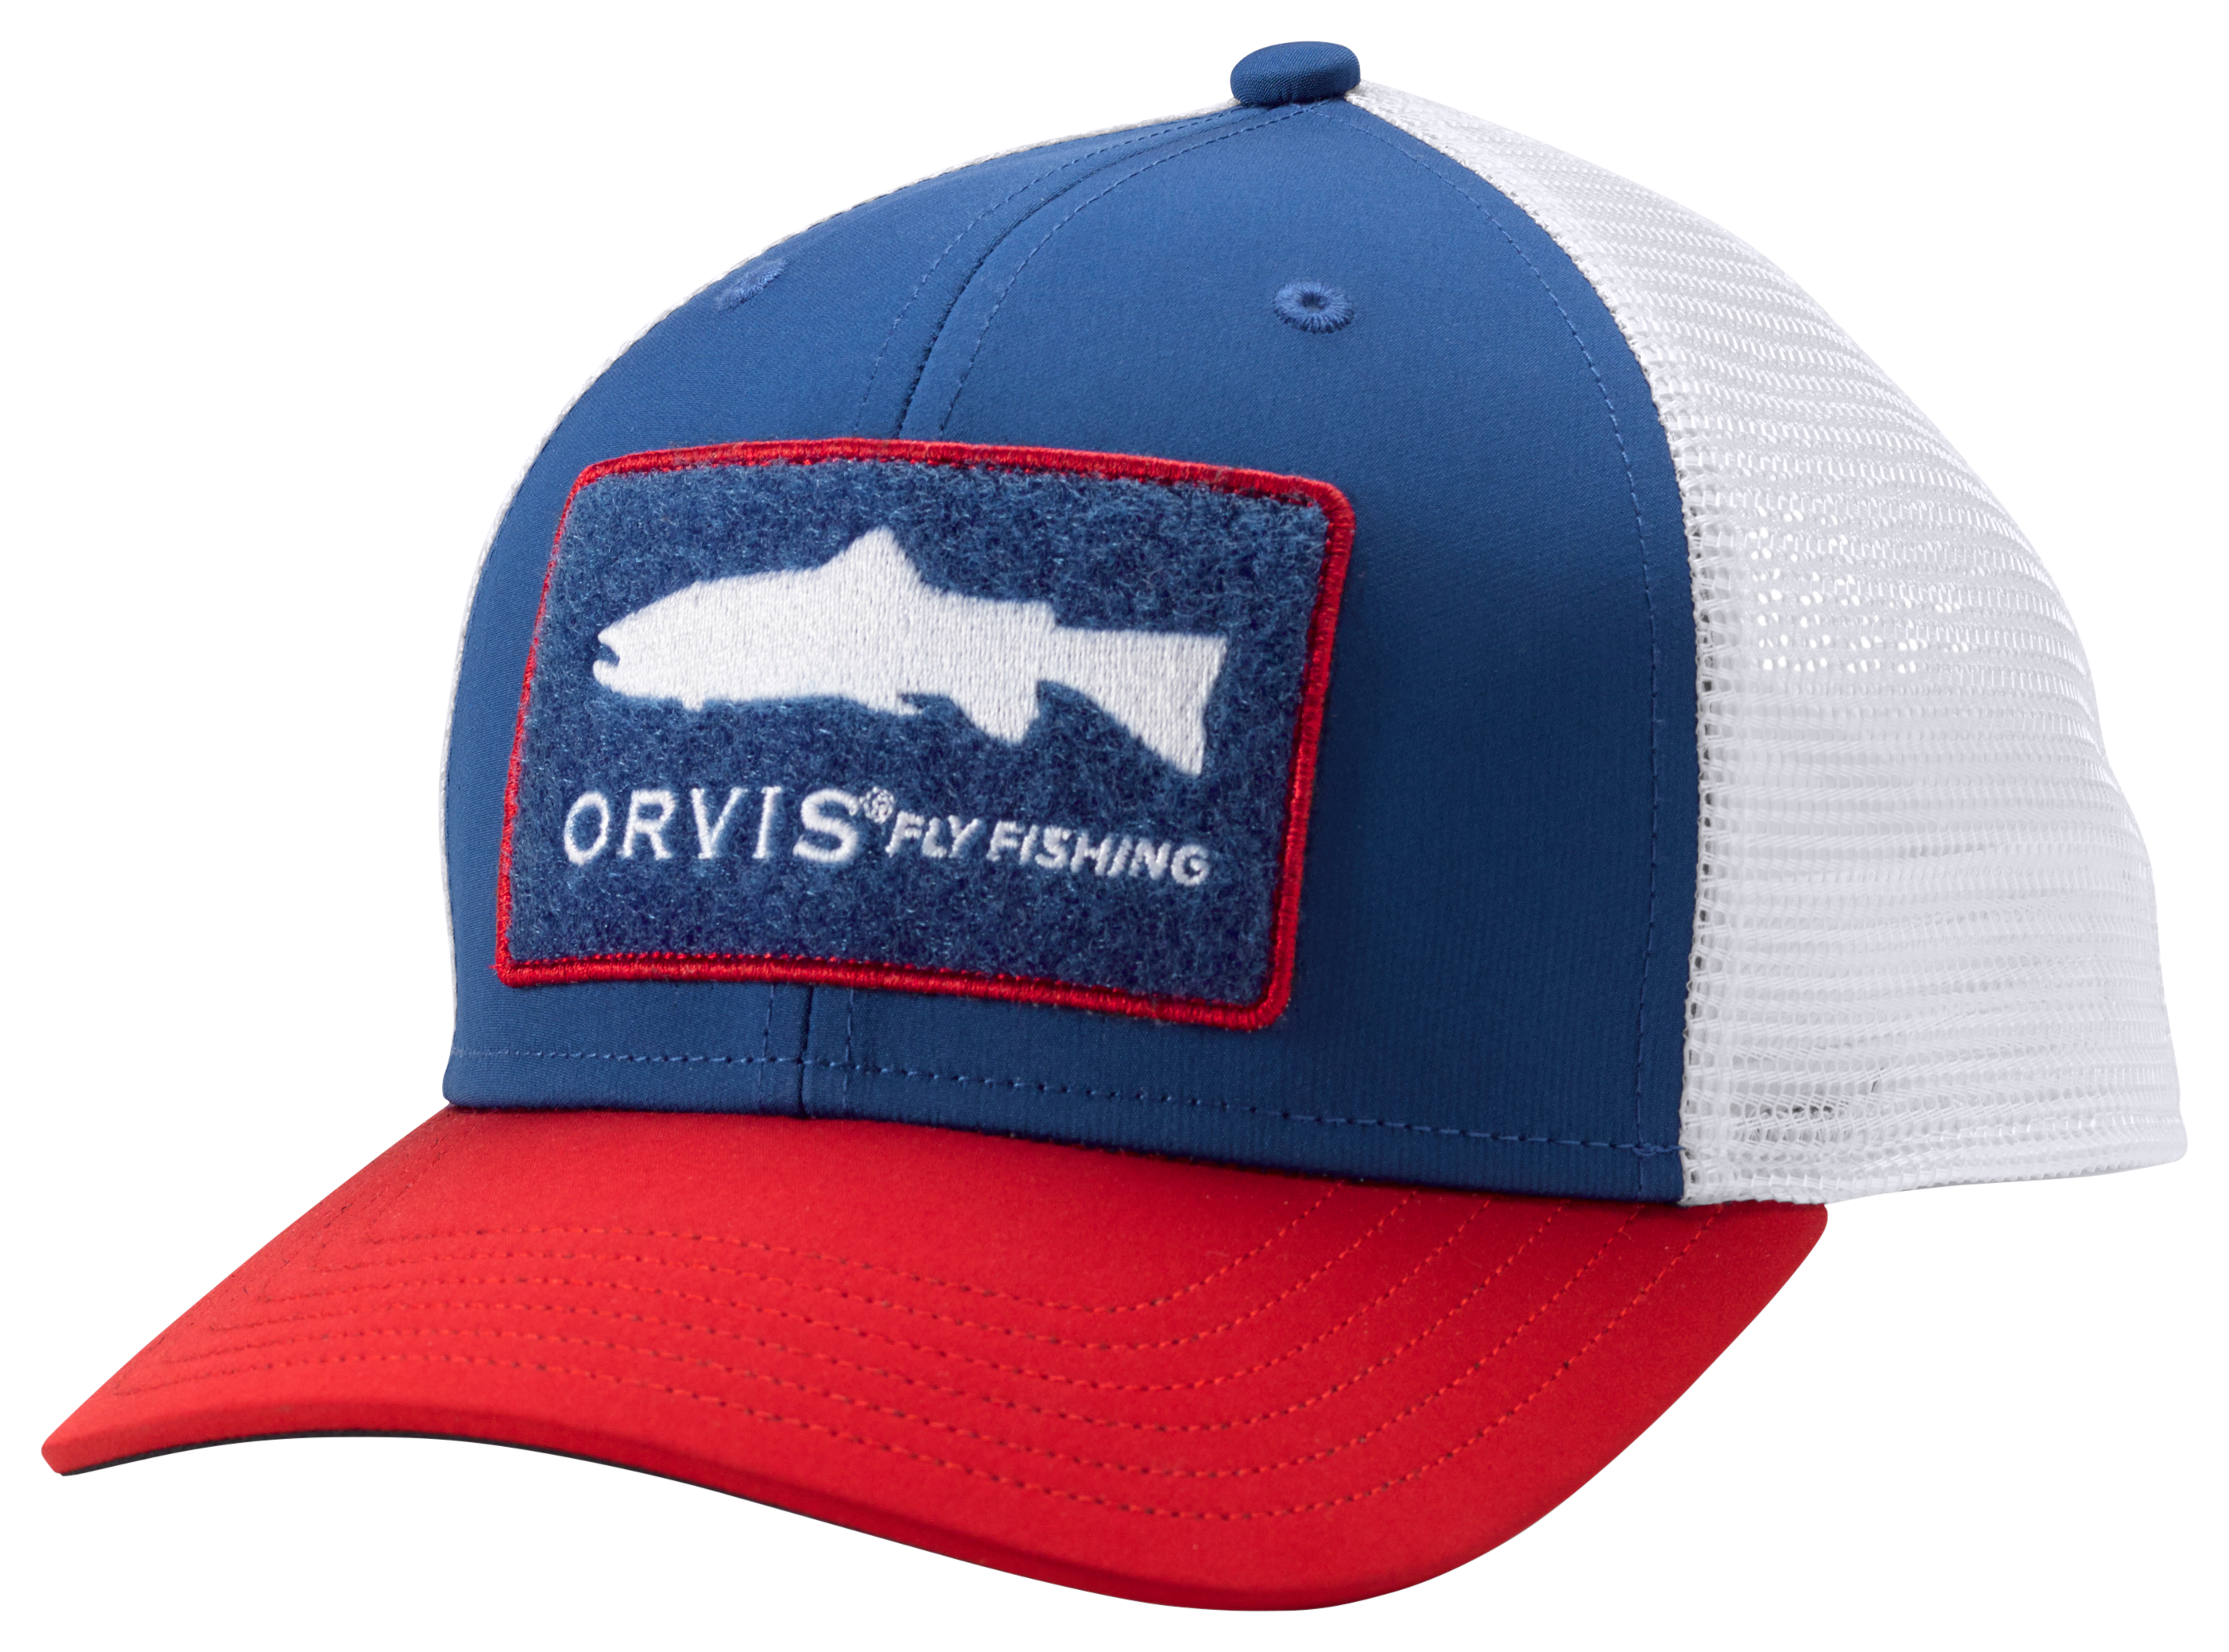 Orvis Covert Fish Series Trucker Cap